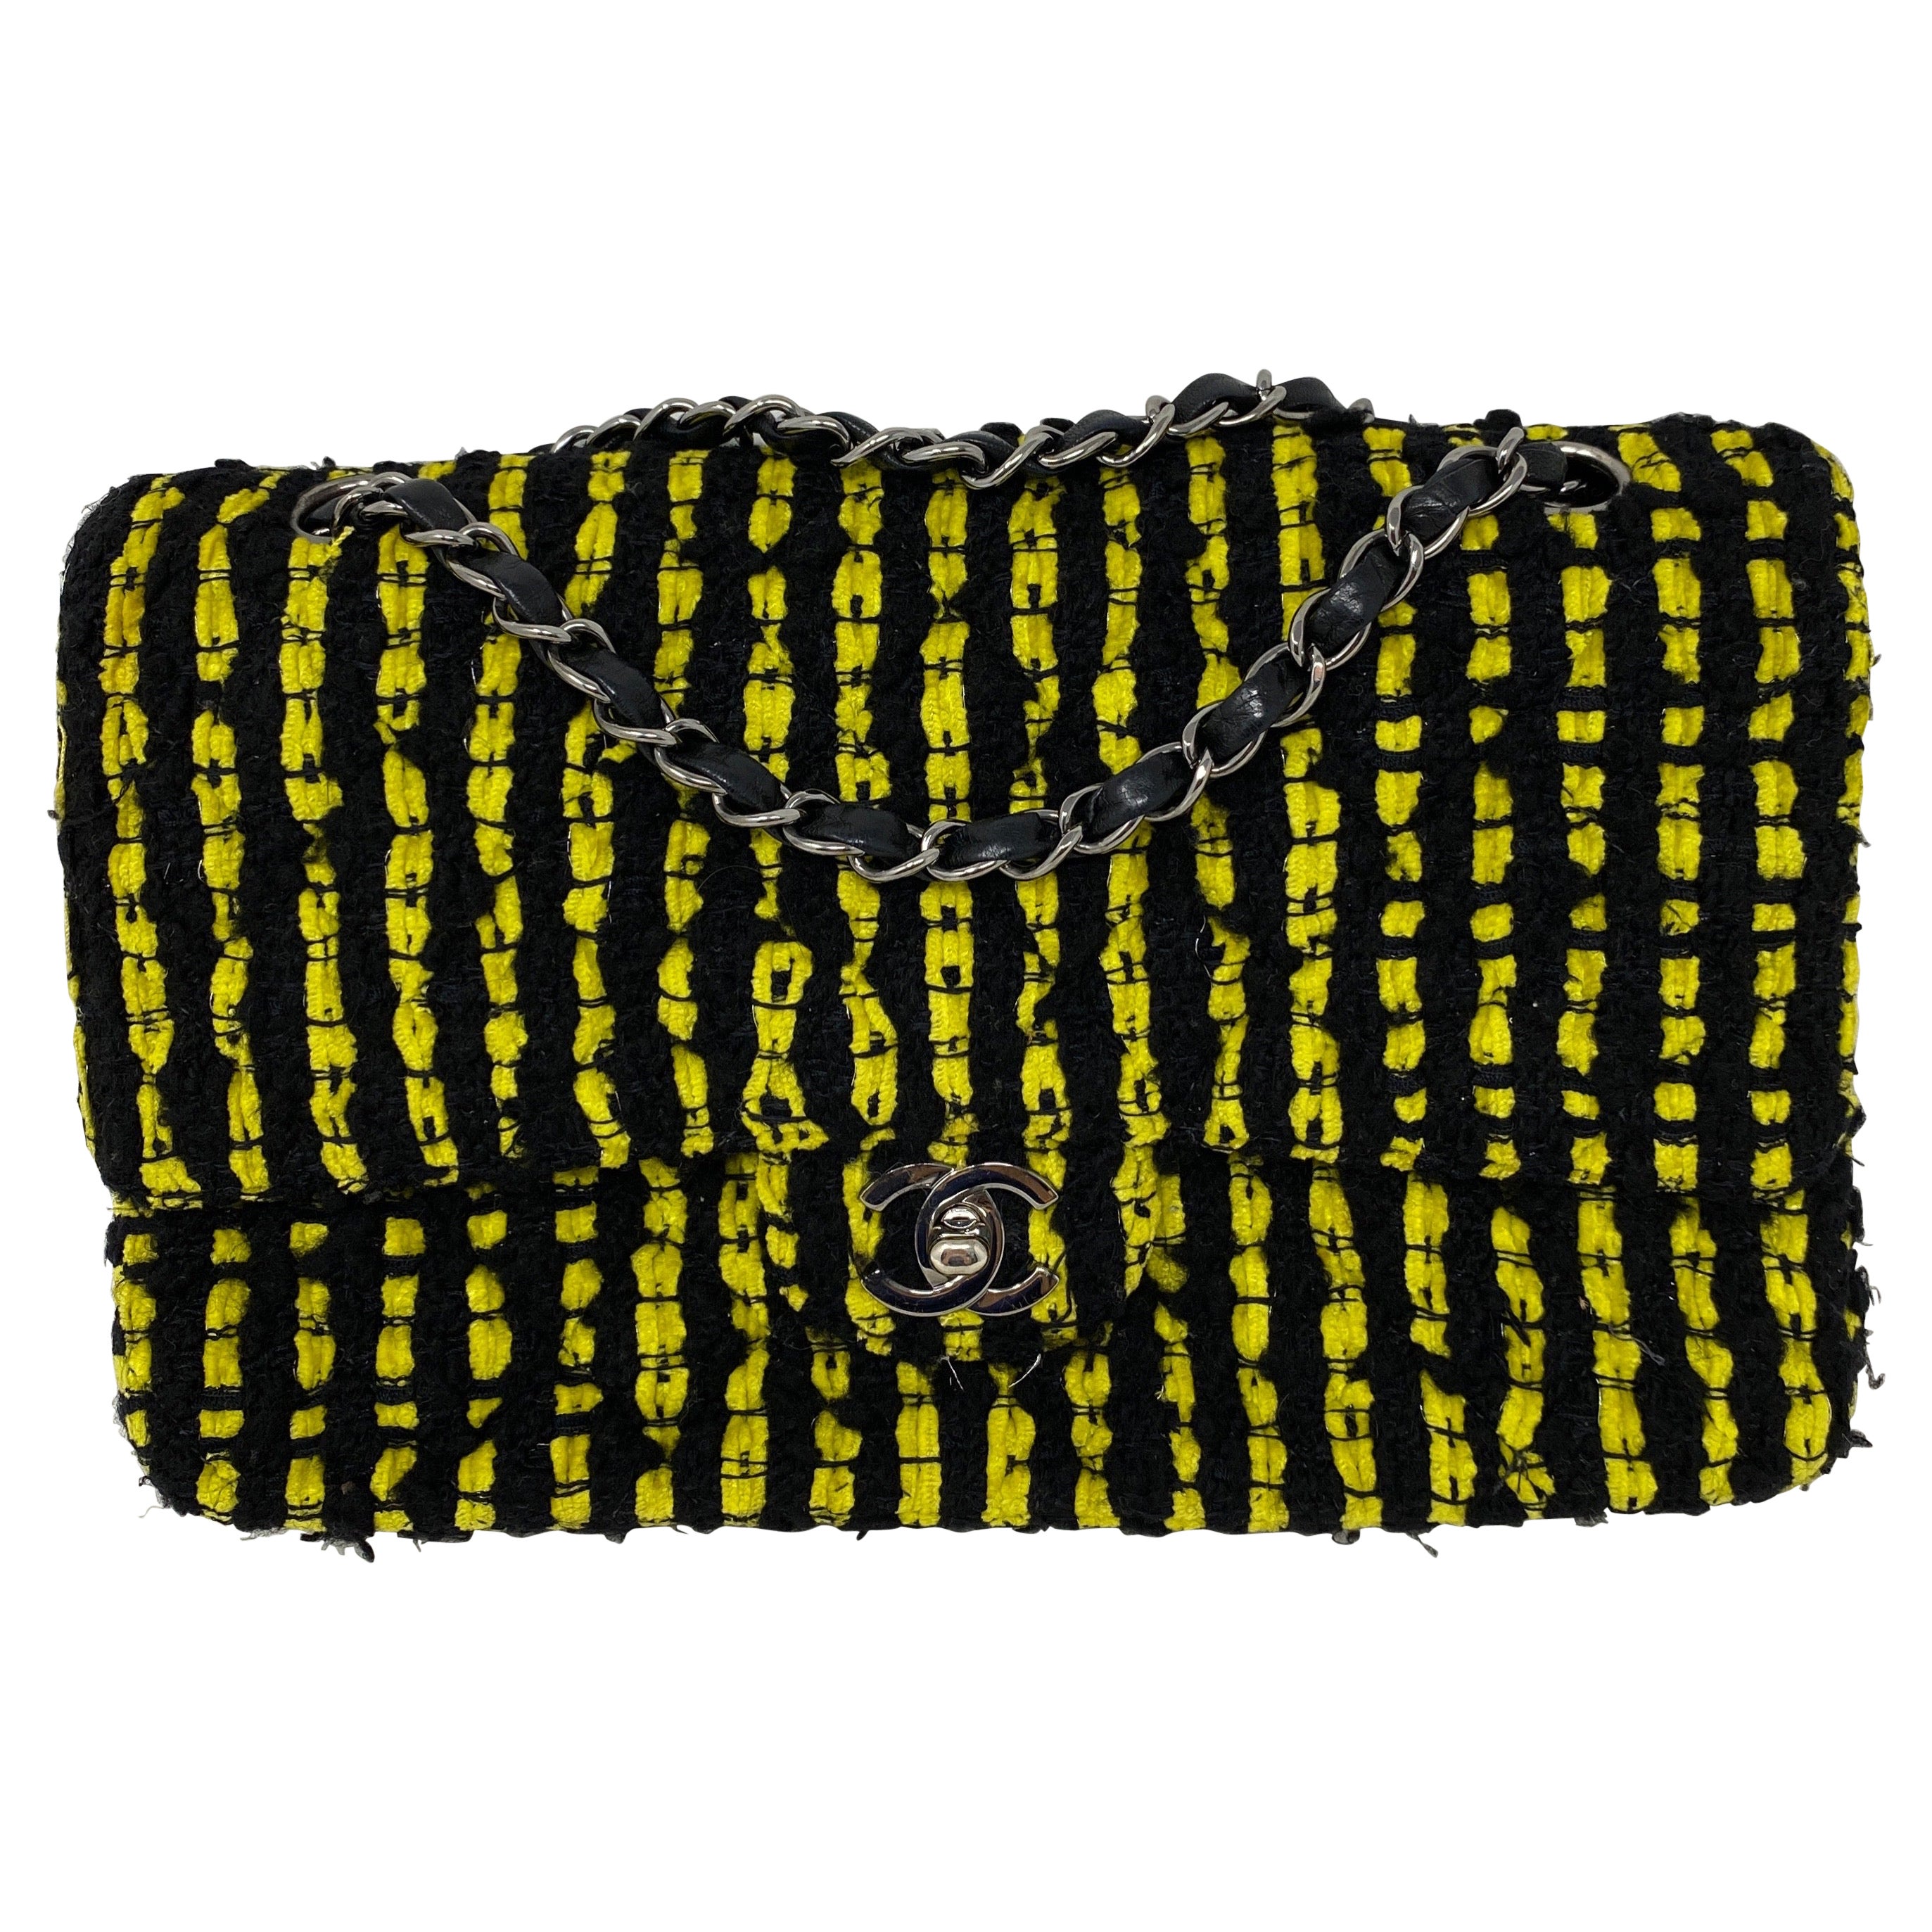 Chanel Yellow and Black Tweed Bag